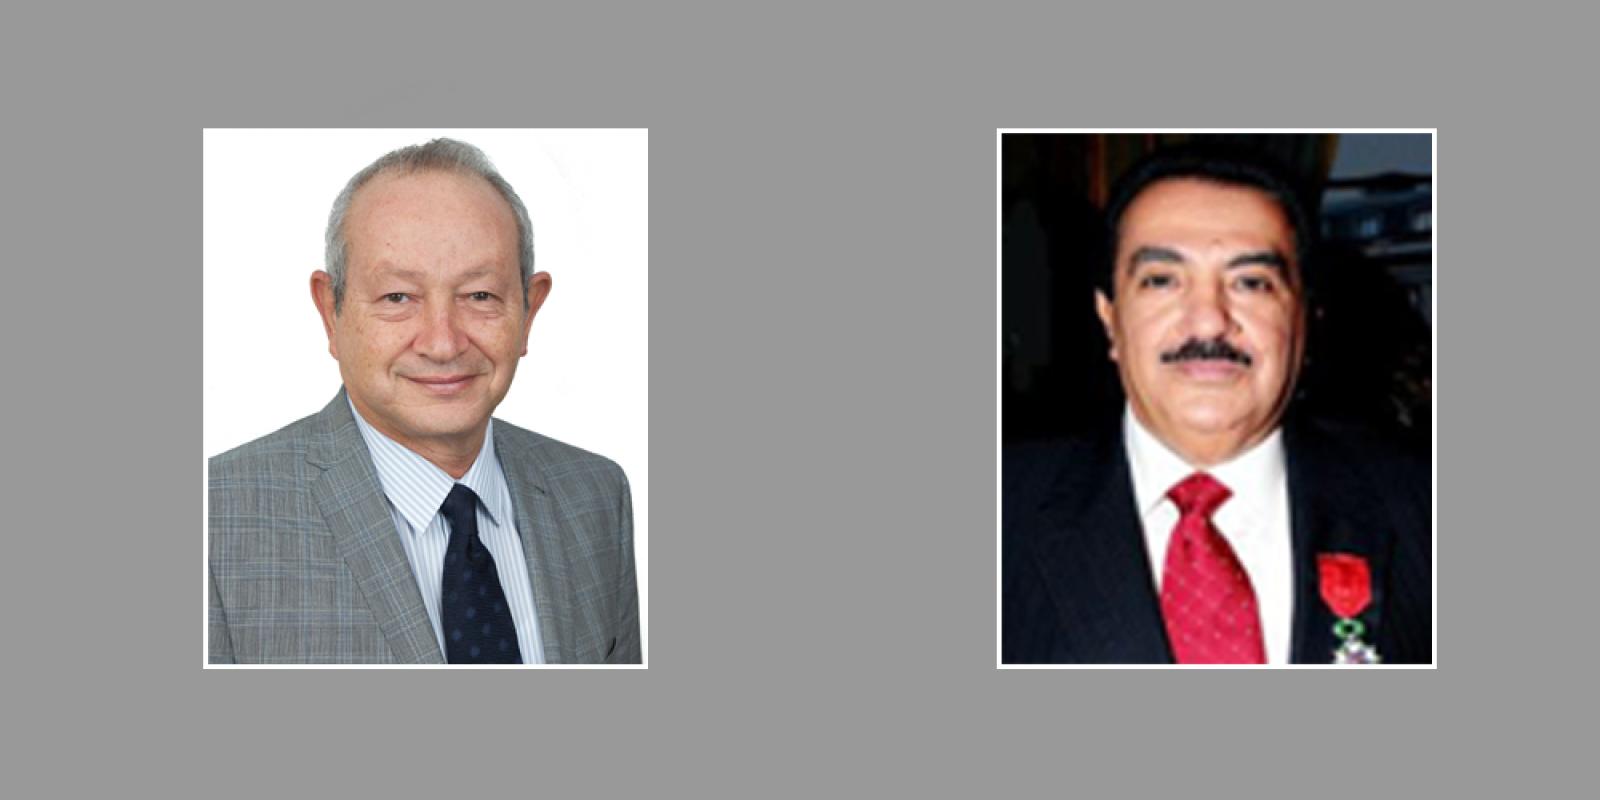 Naguib Sawiris and Hamza AlKholi are the newest members of AUC's Board of Trustees